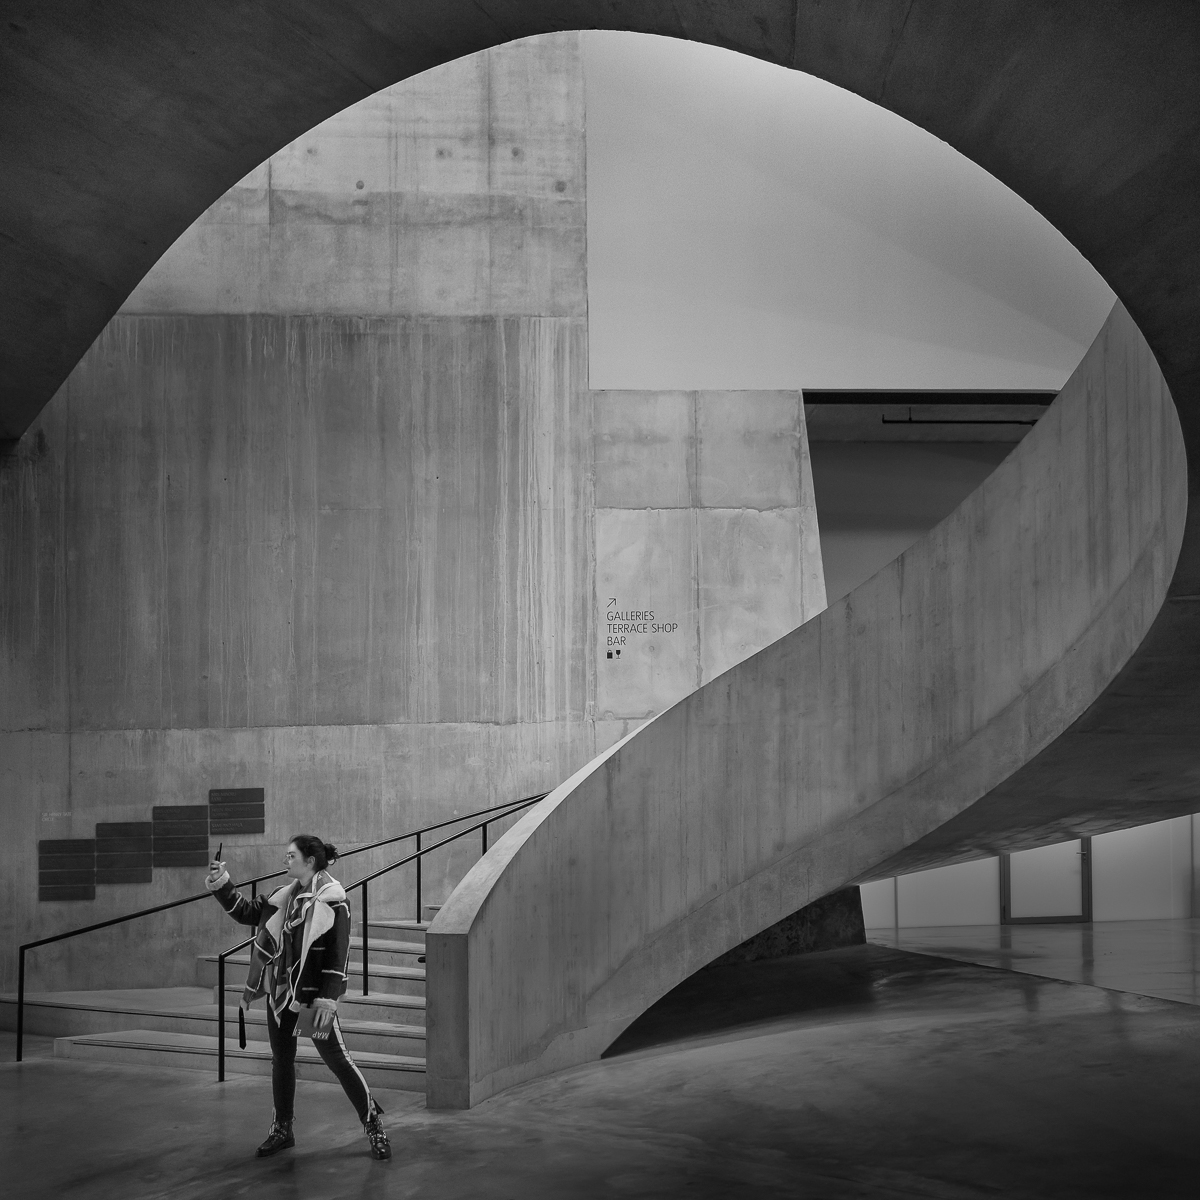 Tate Modern shapes